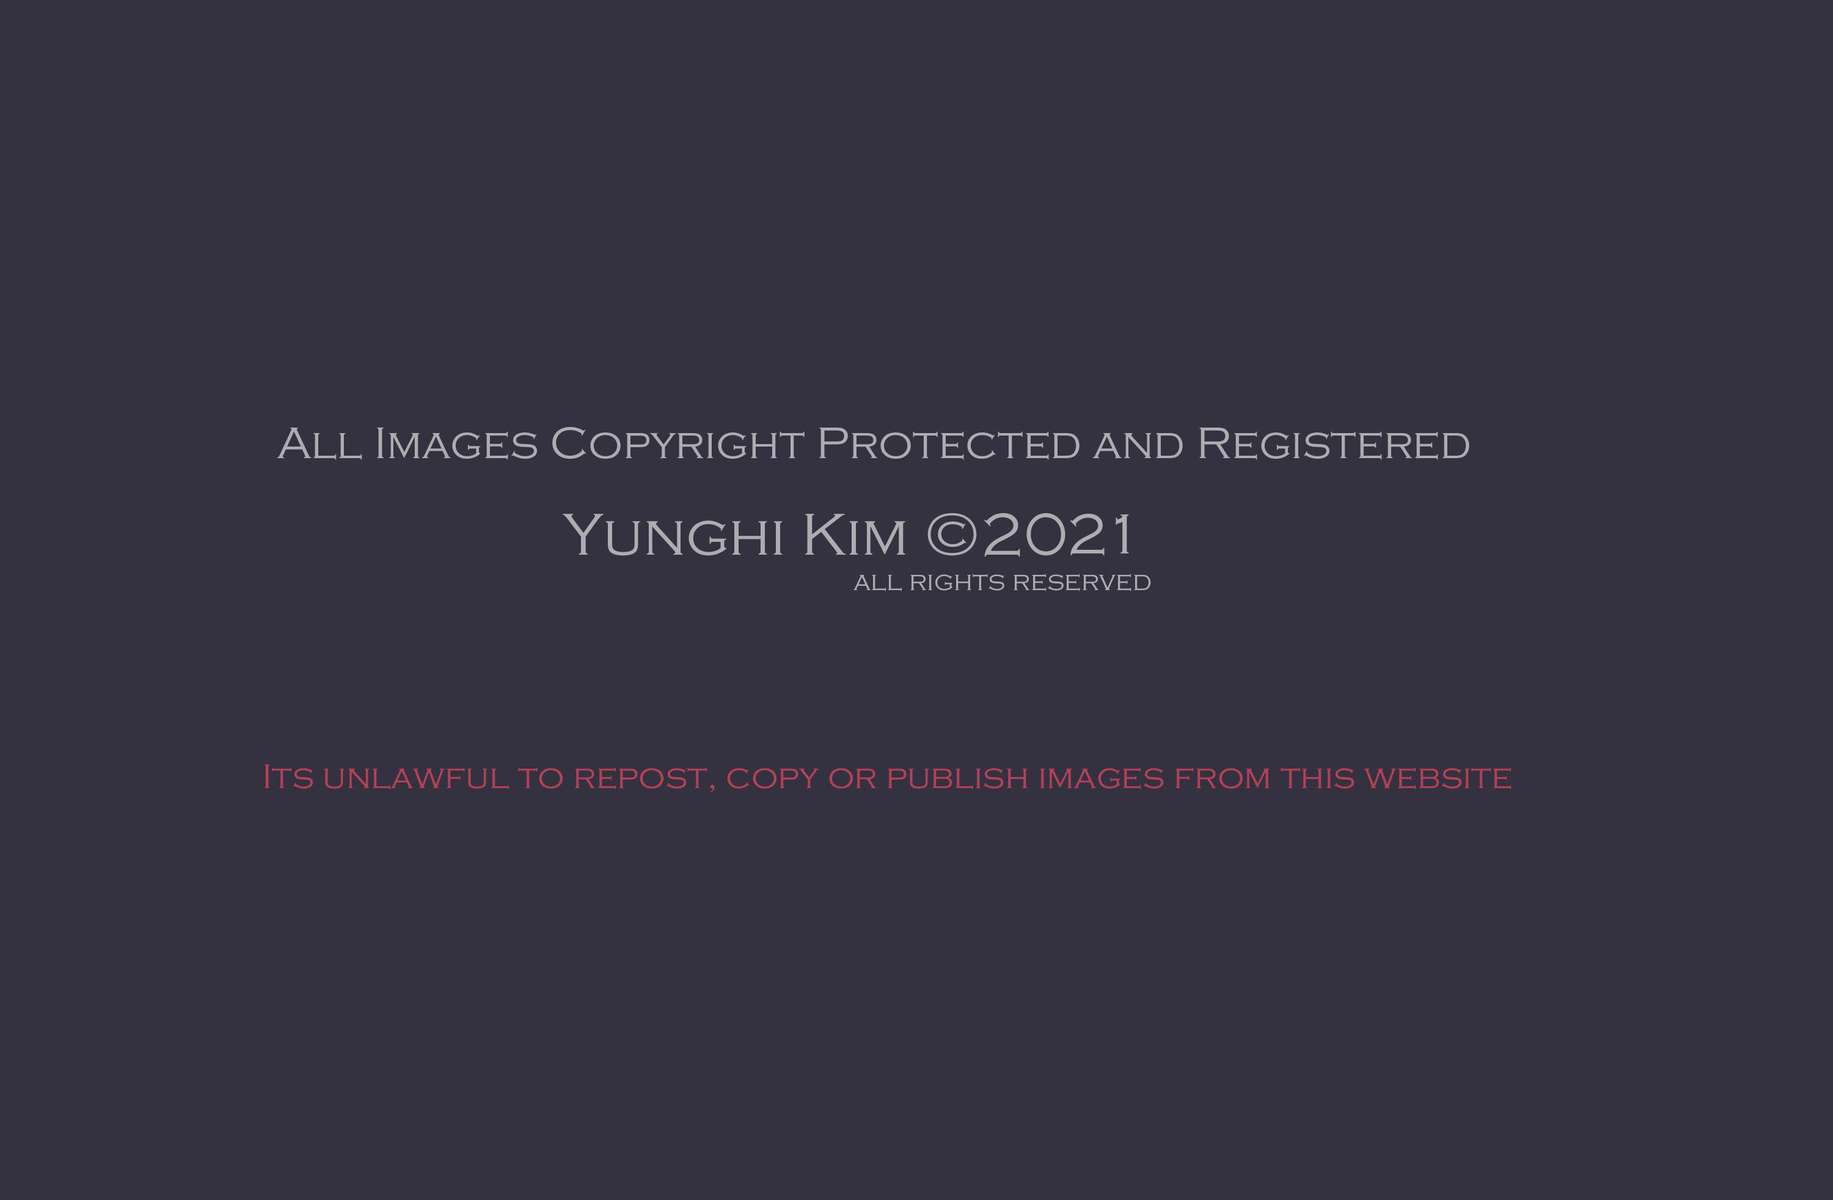 Copyright_title2020